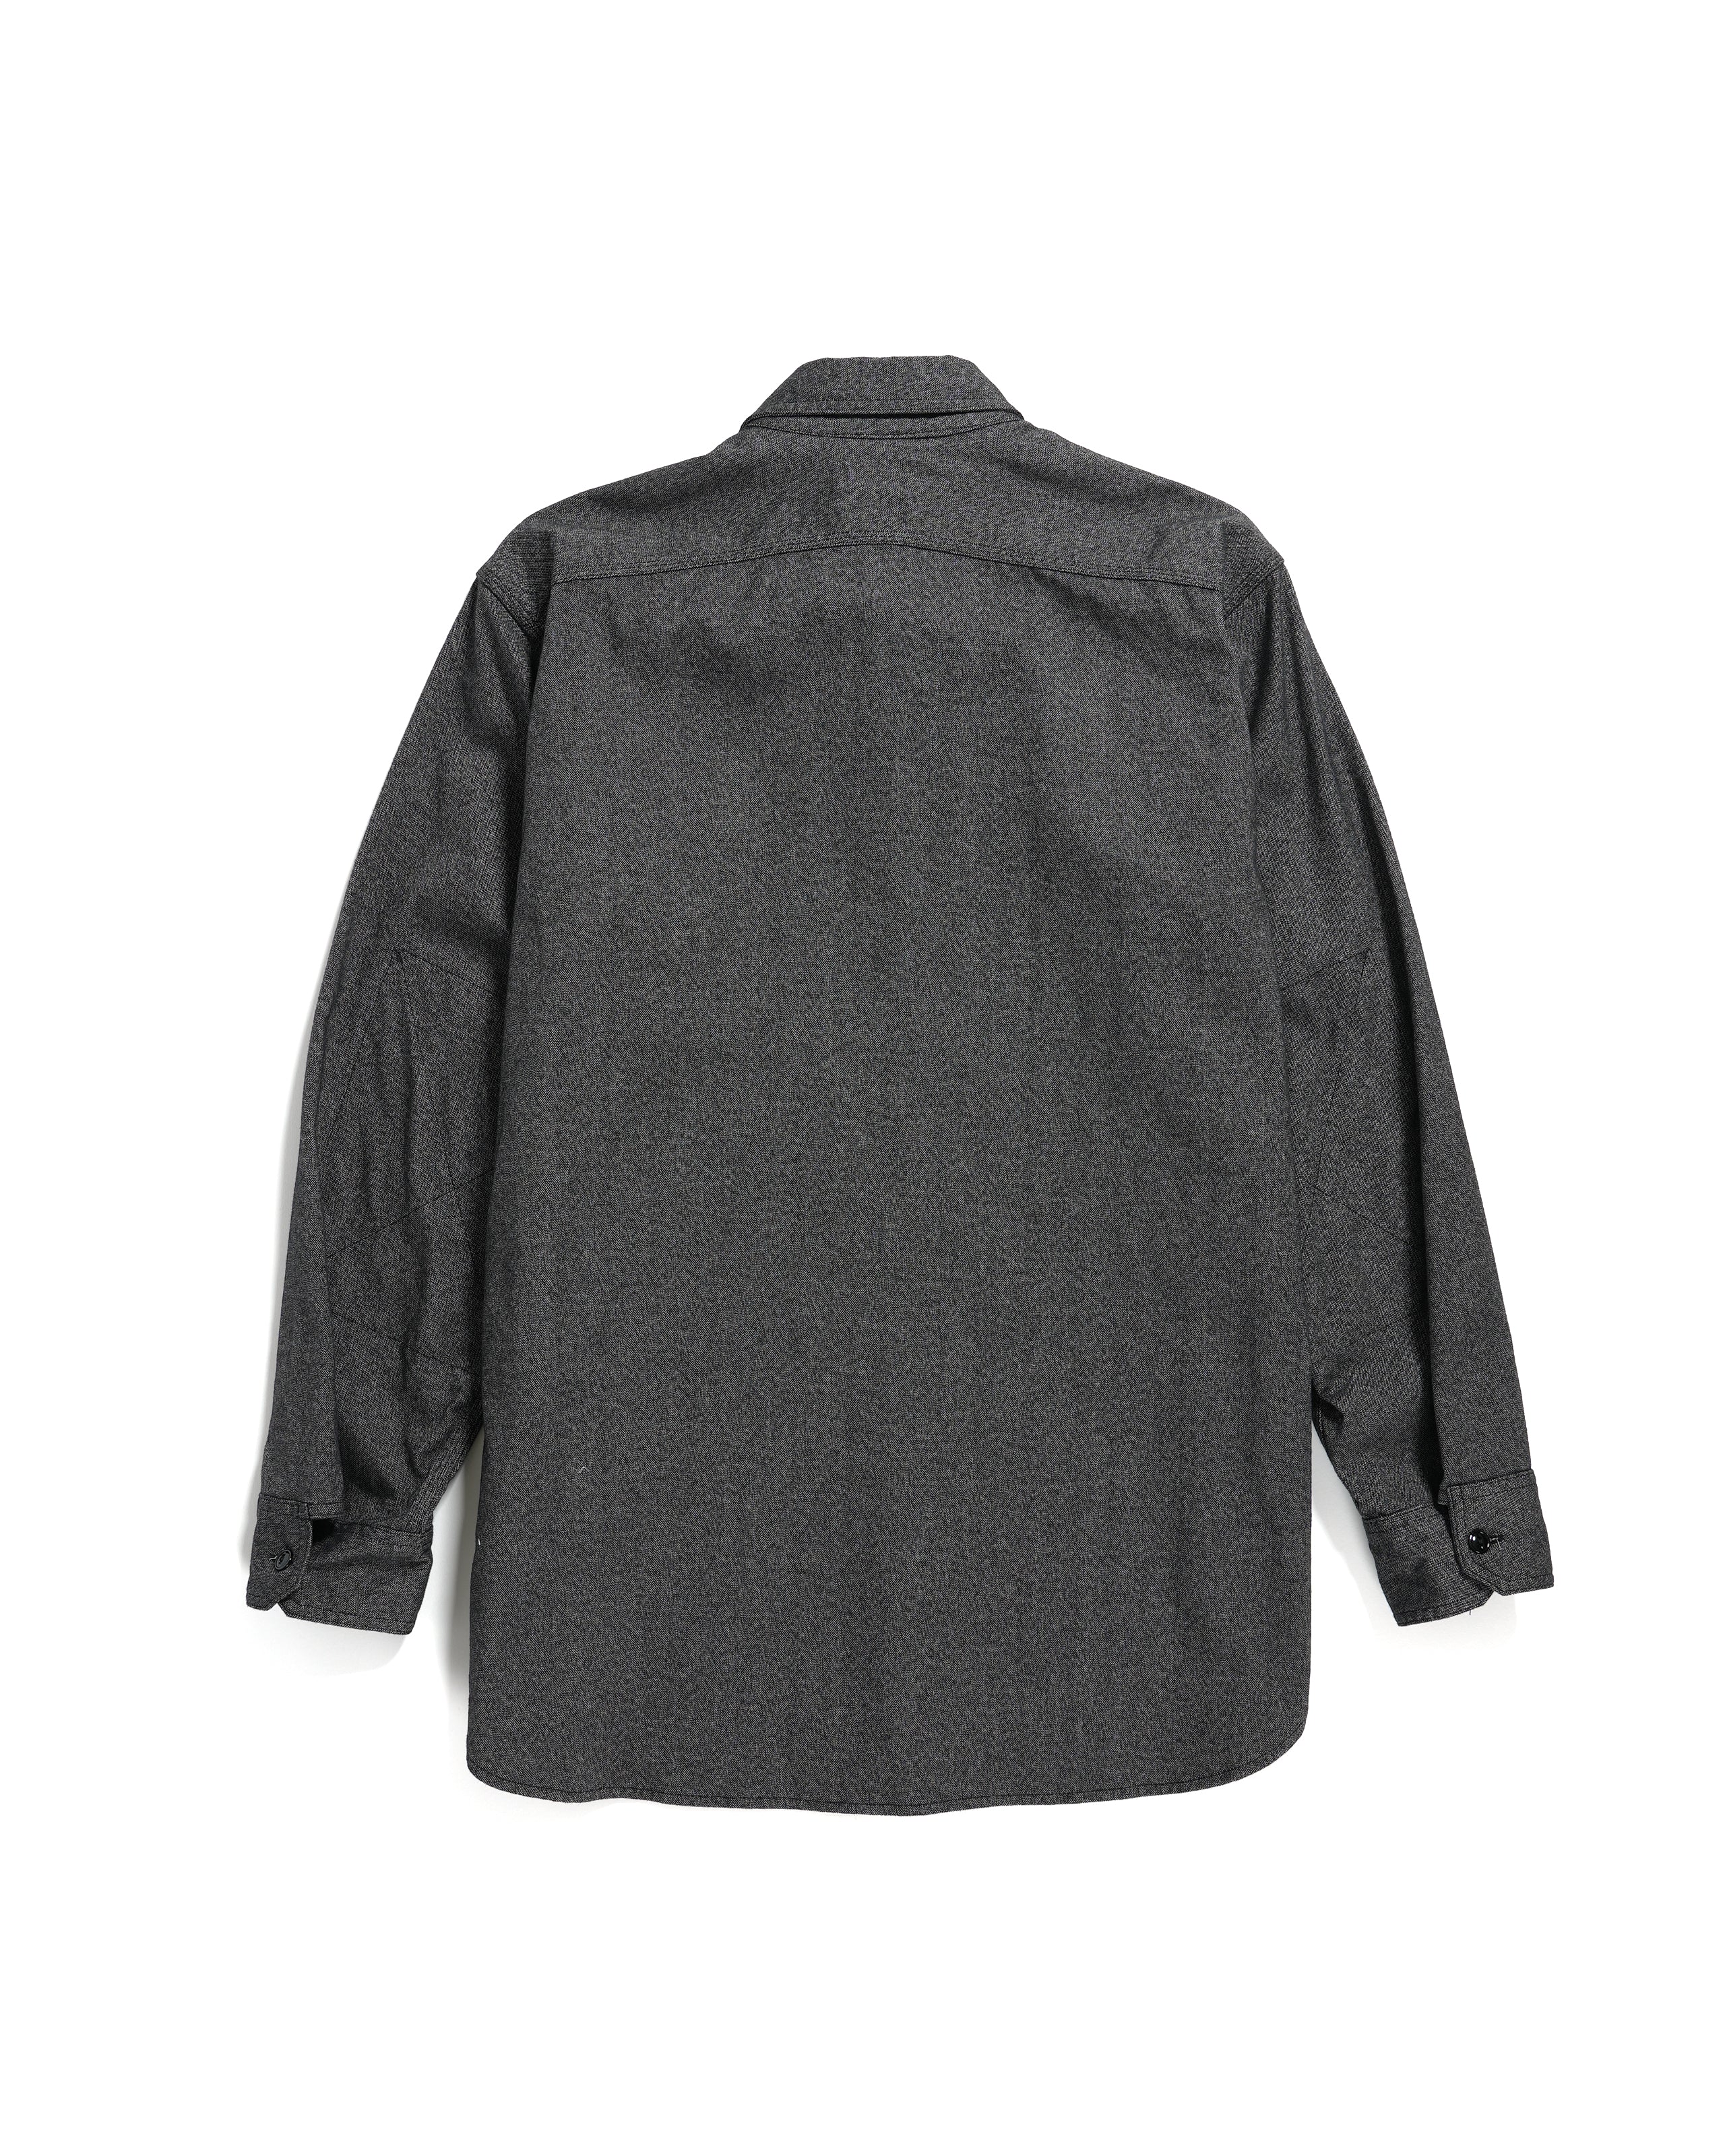 Work Shirt Cotton Grey York | Heather Nepenthes - New Heavy